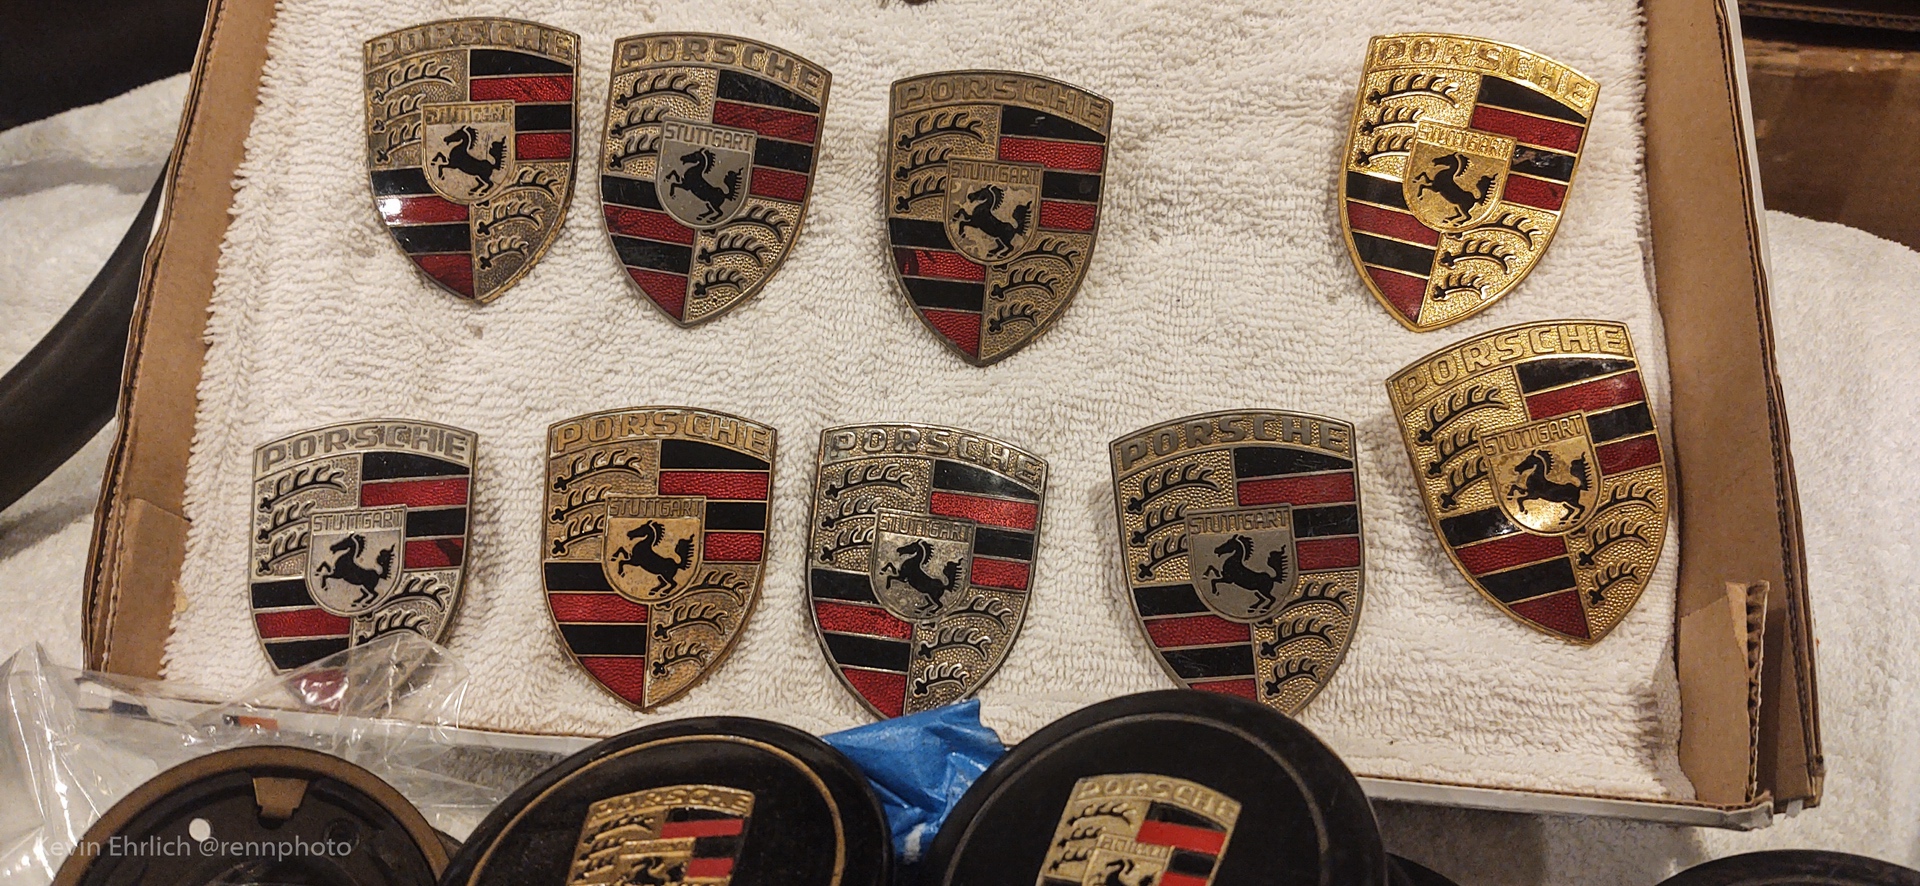 Porsche badges resting on towel in box